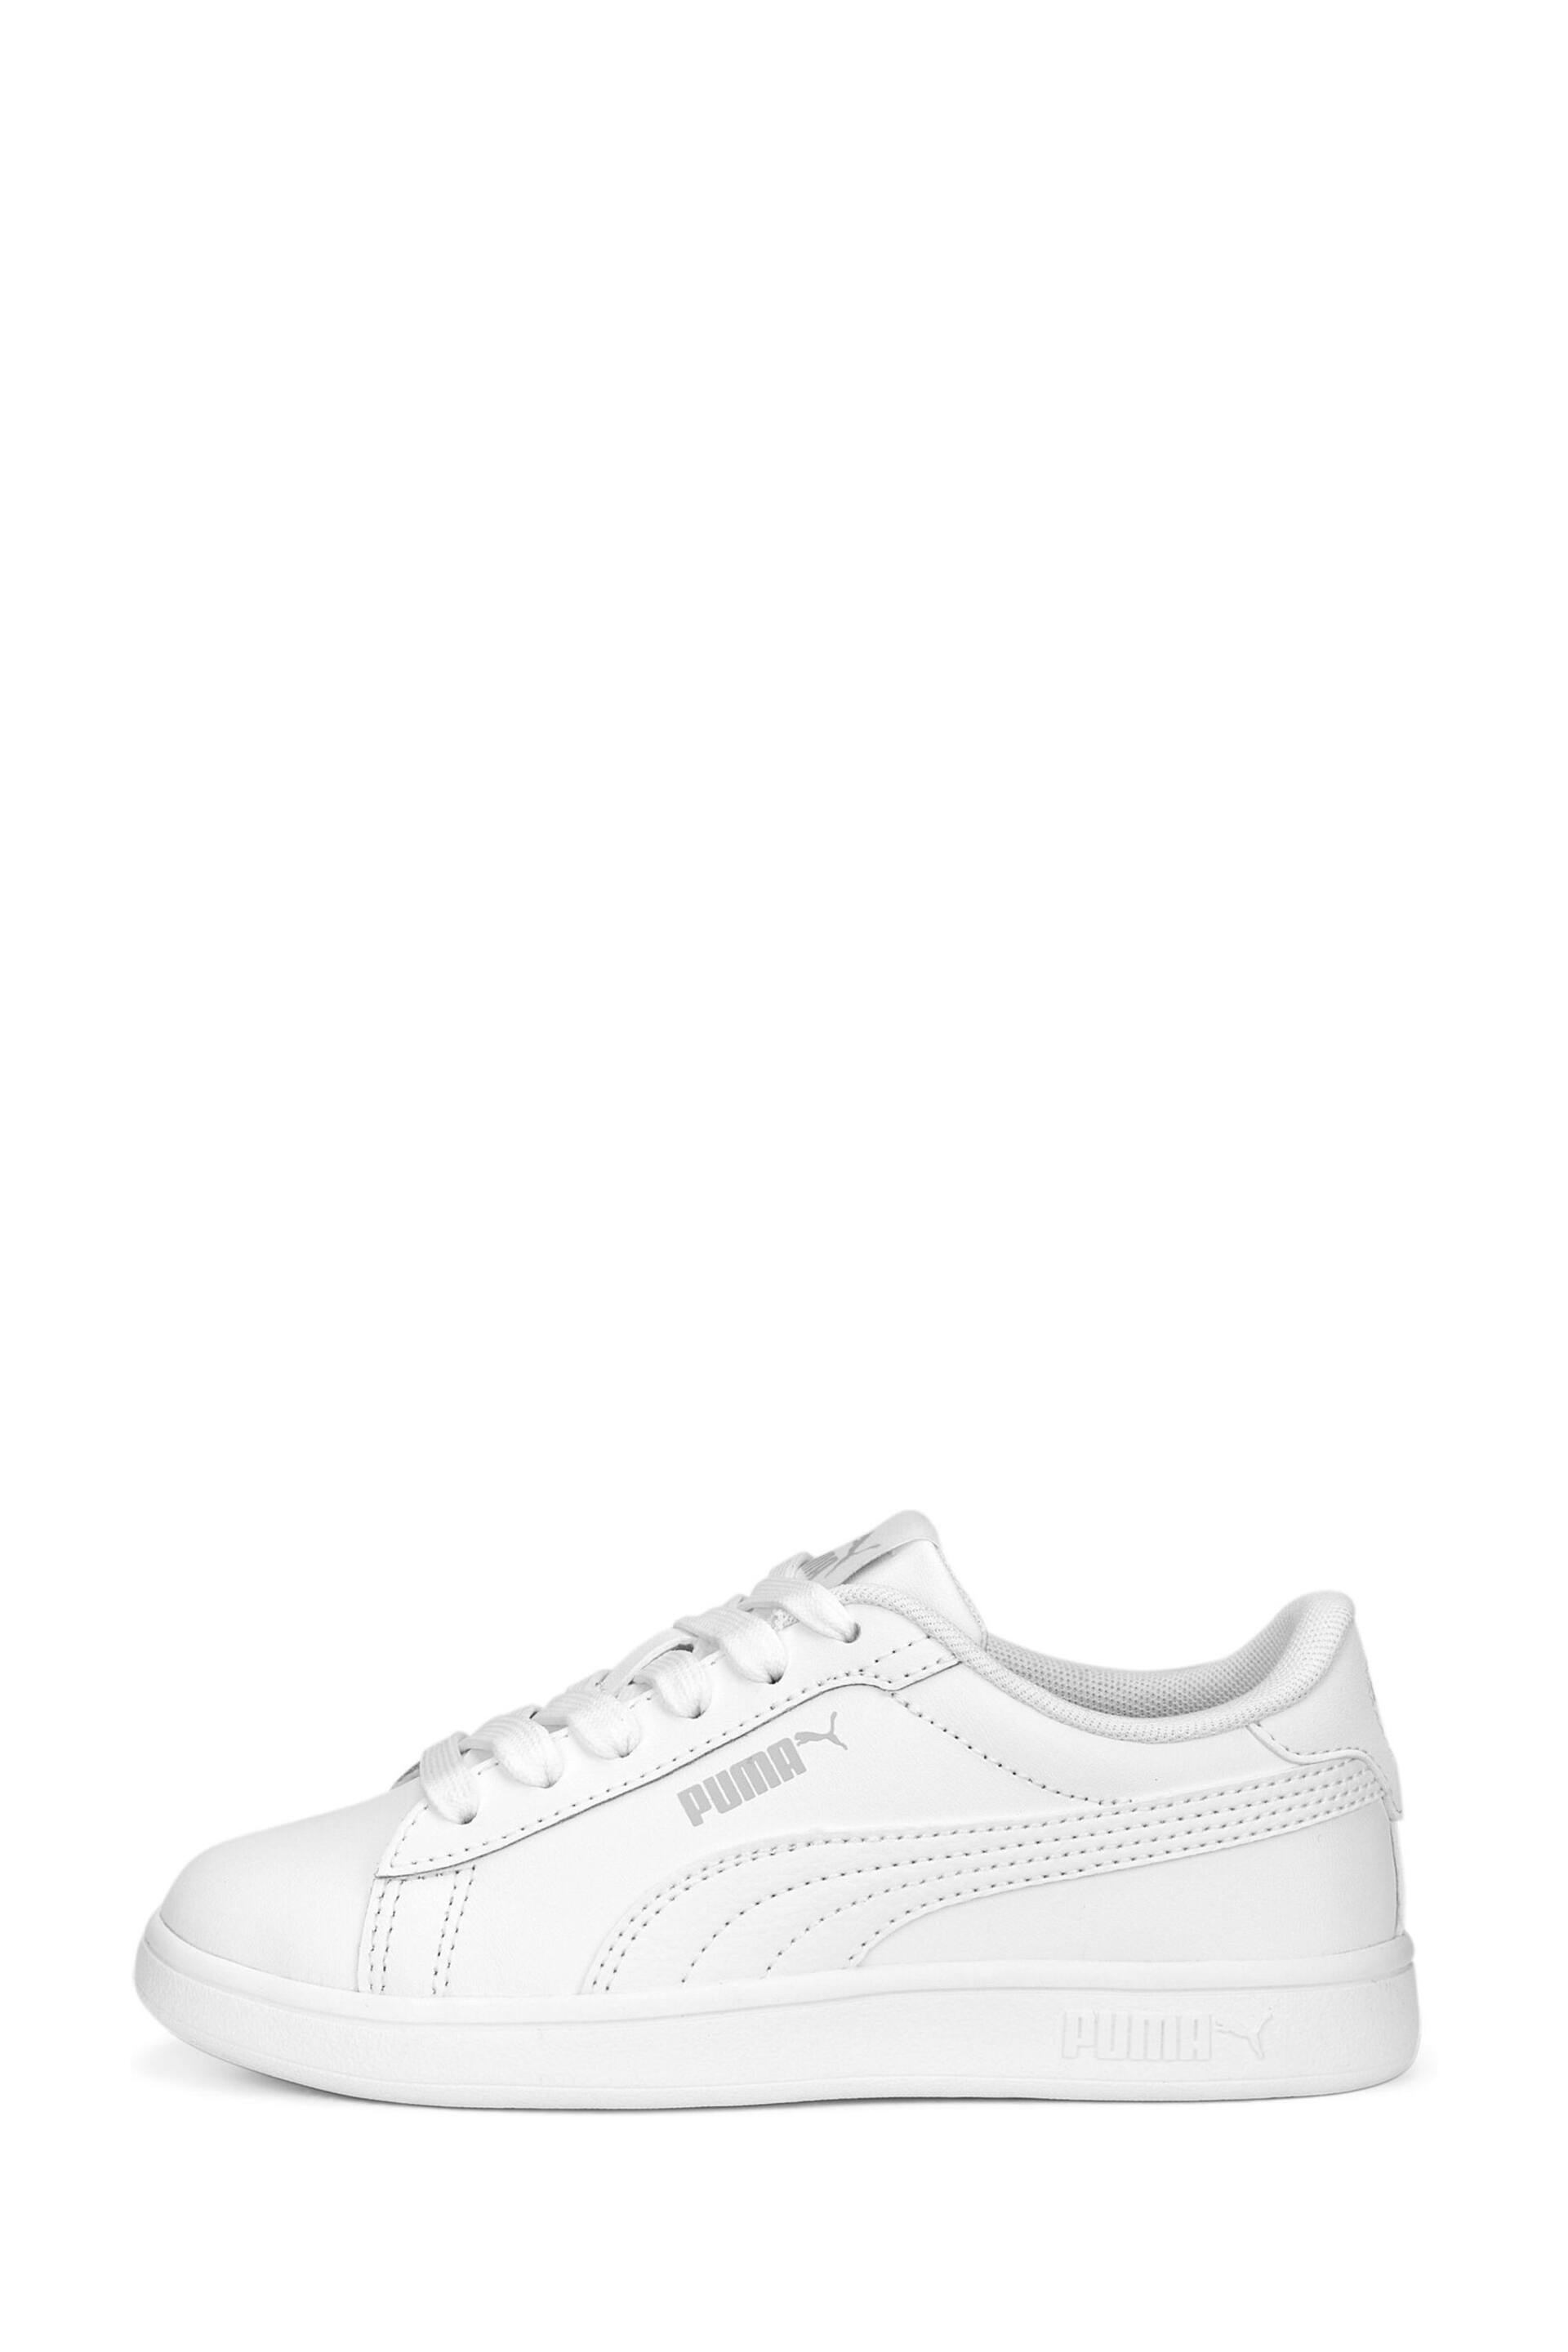 Puma Off White Smash 3.0 L Shoes - Image 2 of 6